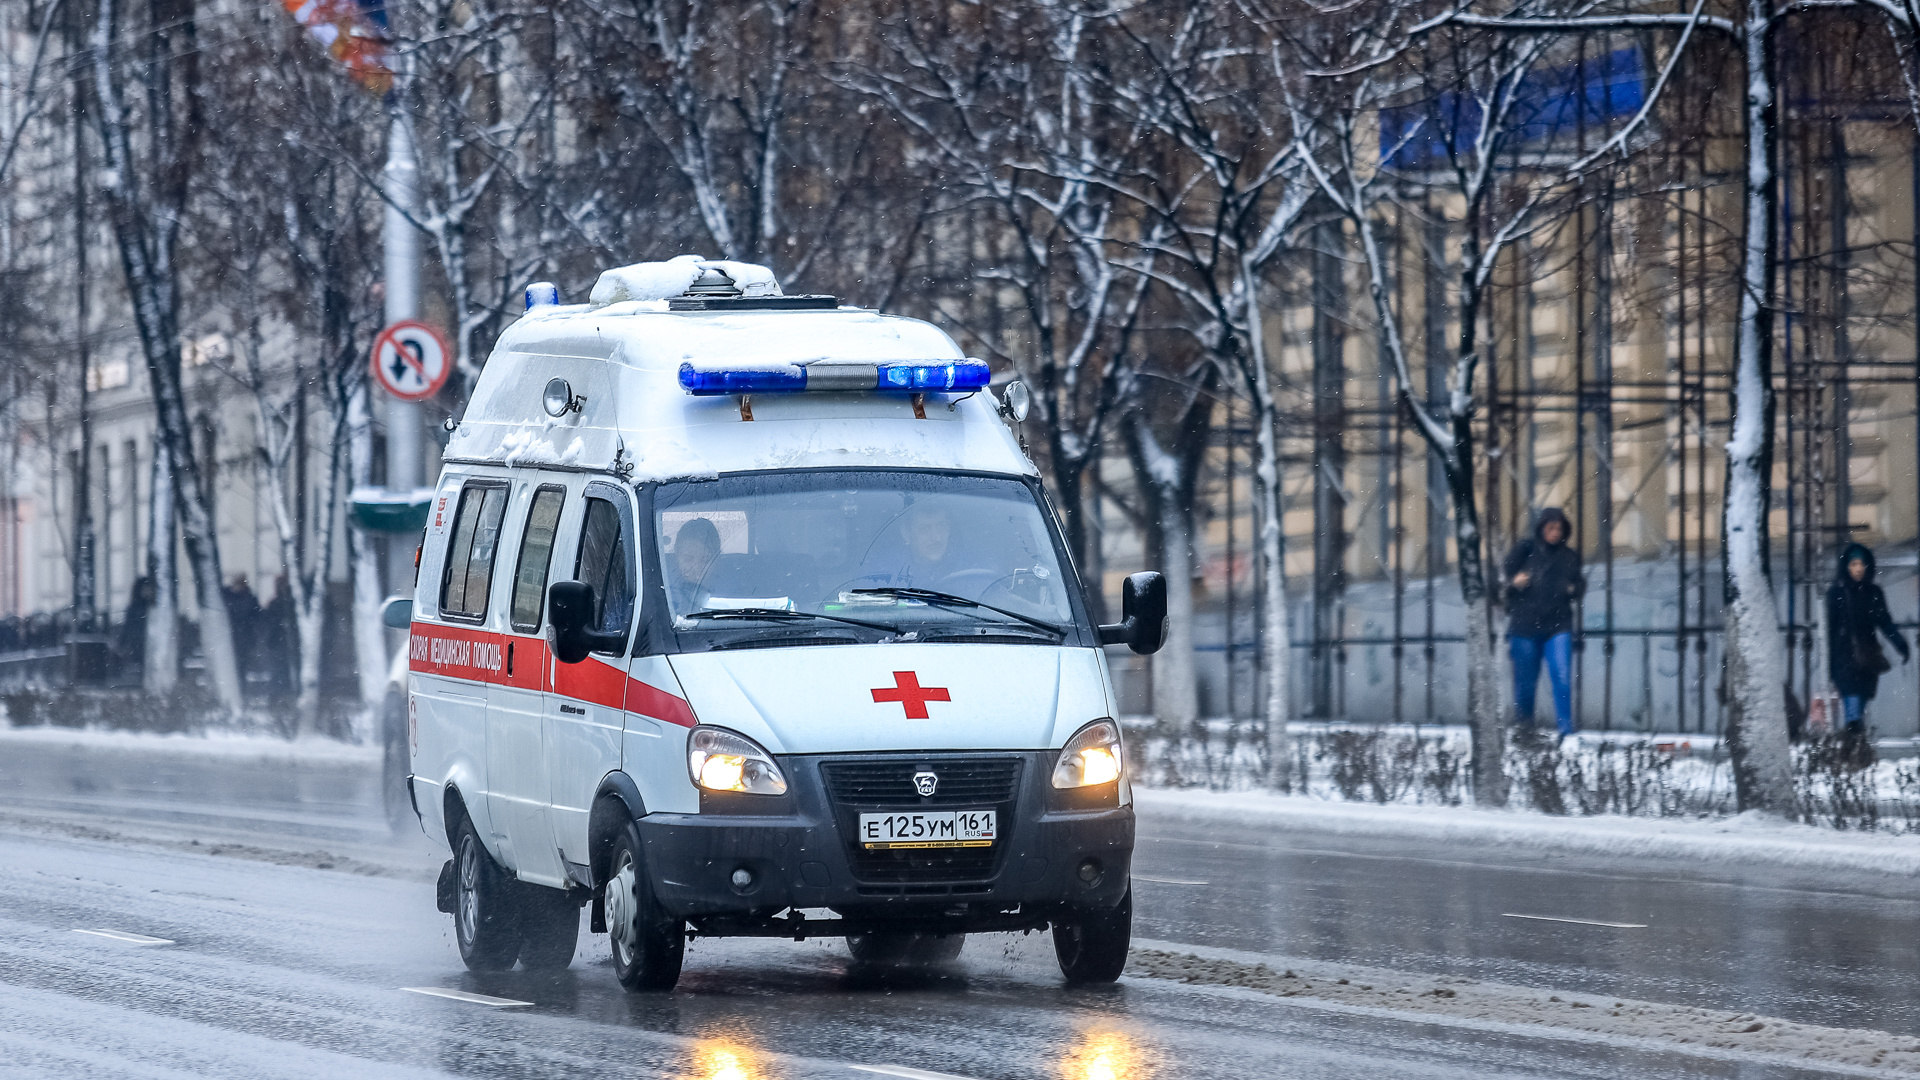 Ребенок пережил наезд грузовика в Новокузнецке — подробности аварии